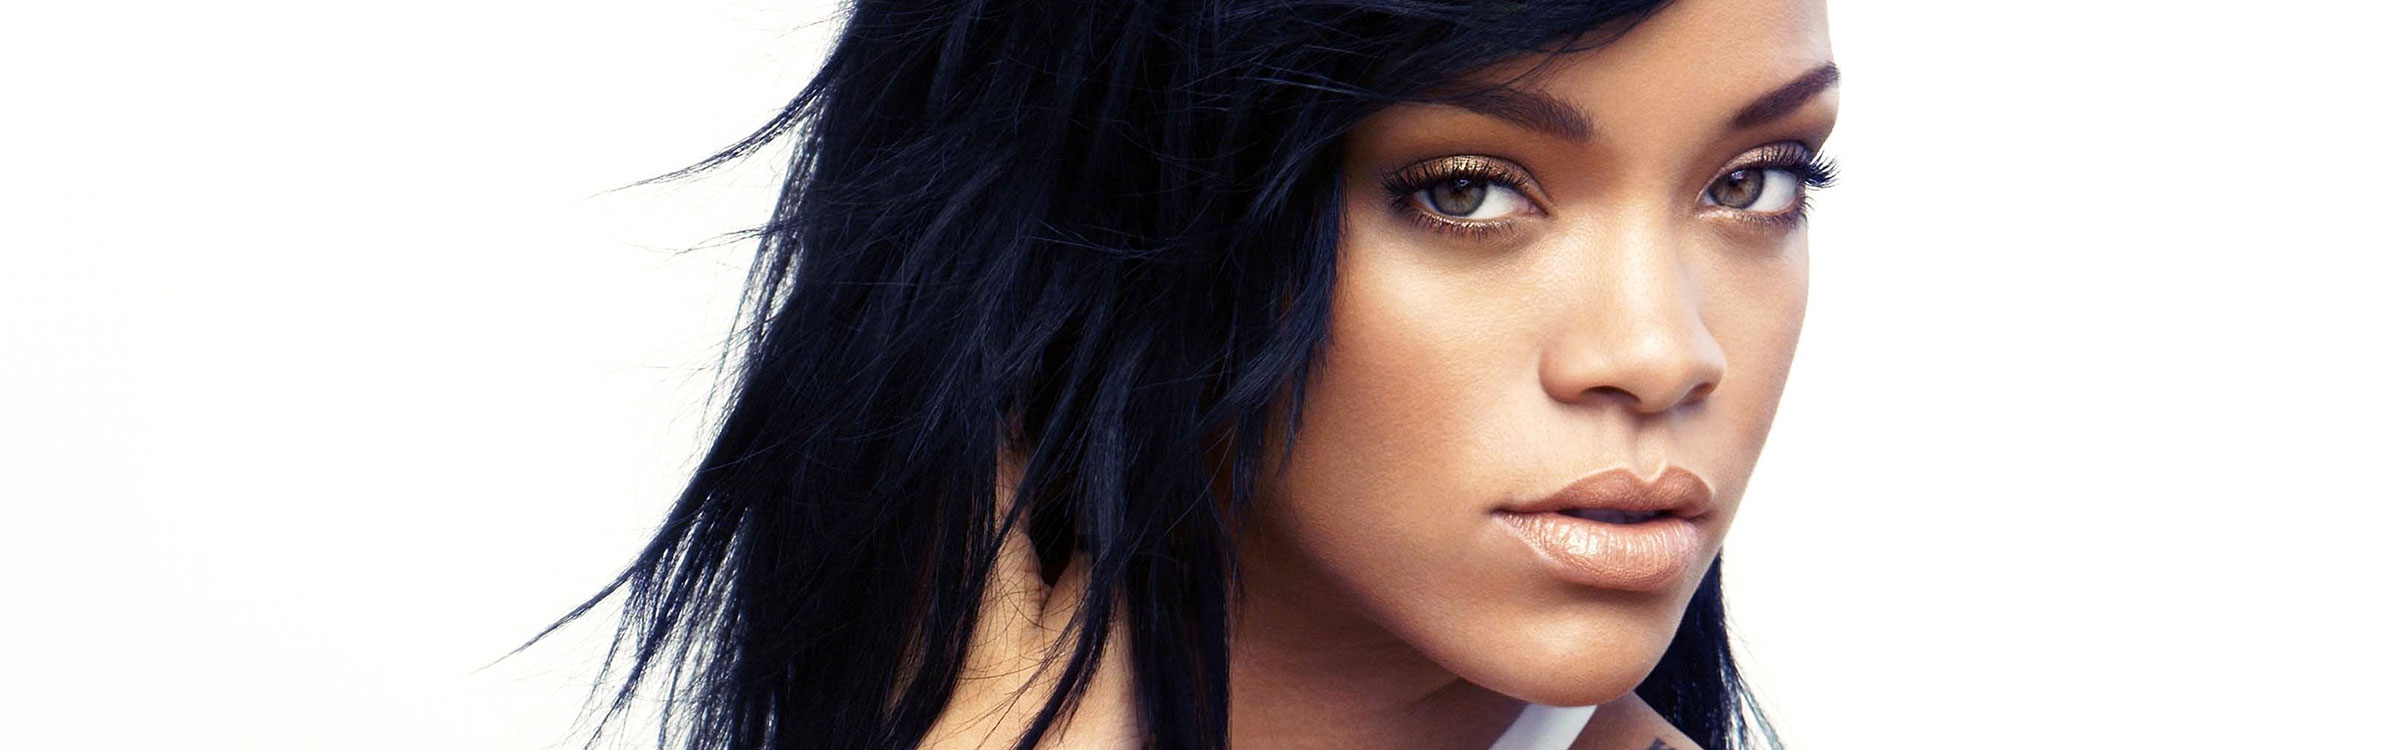 Rihanna 2014 wide